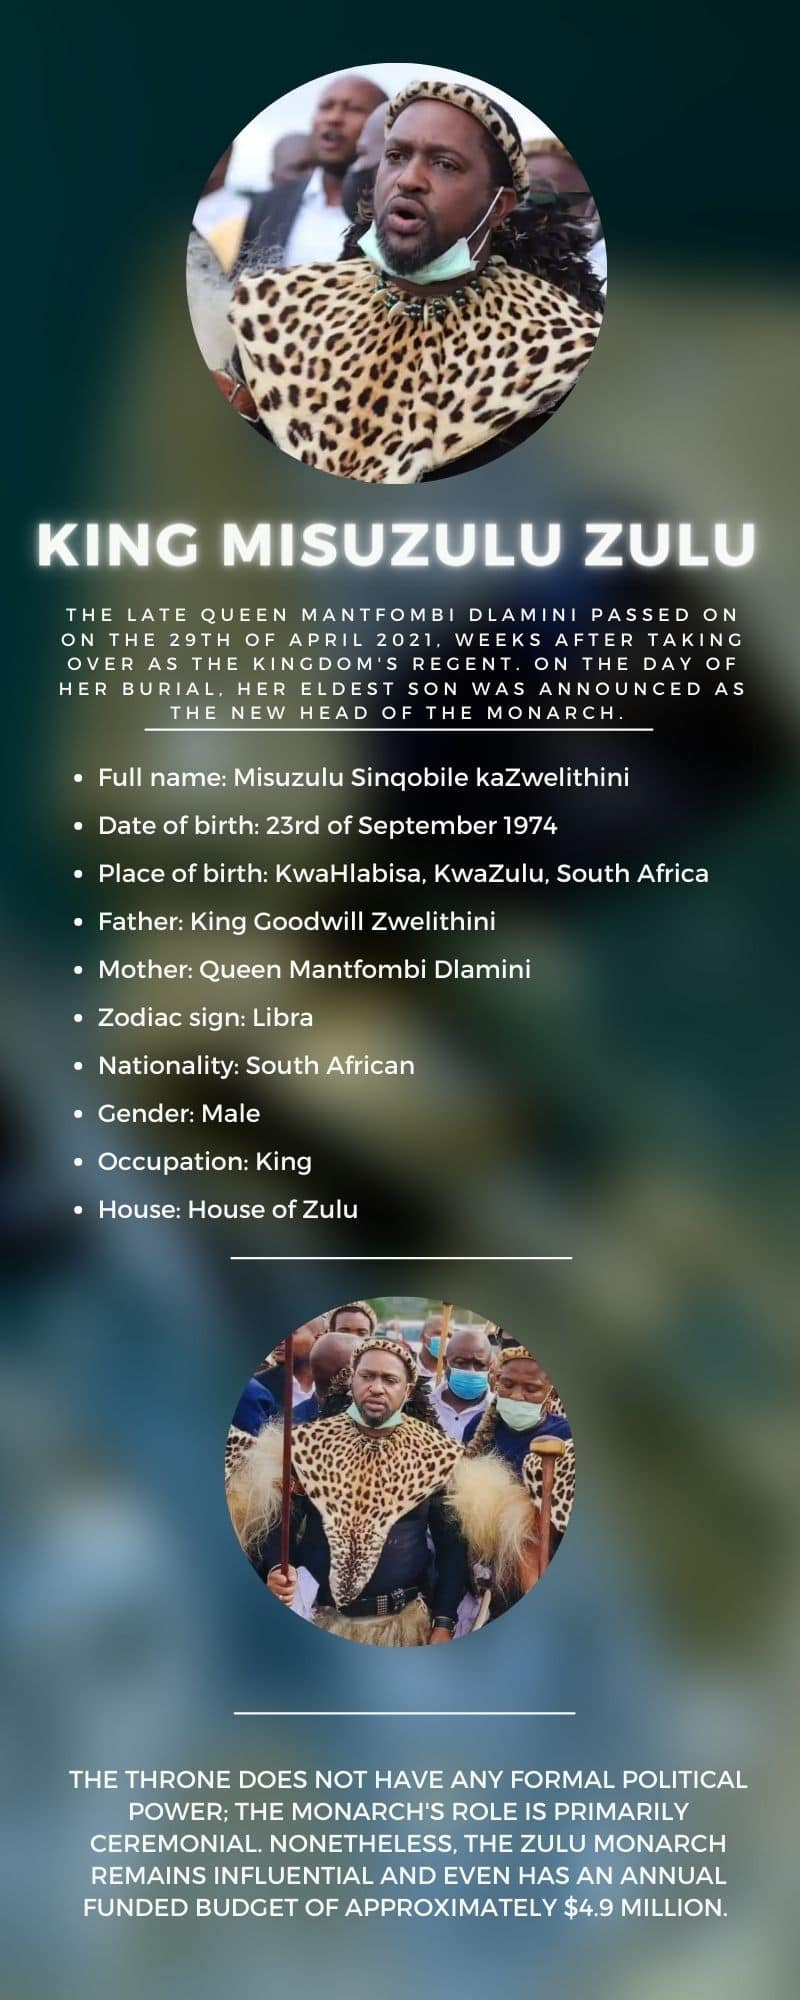 King Misuzulu Zulu bio